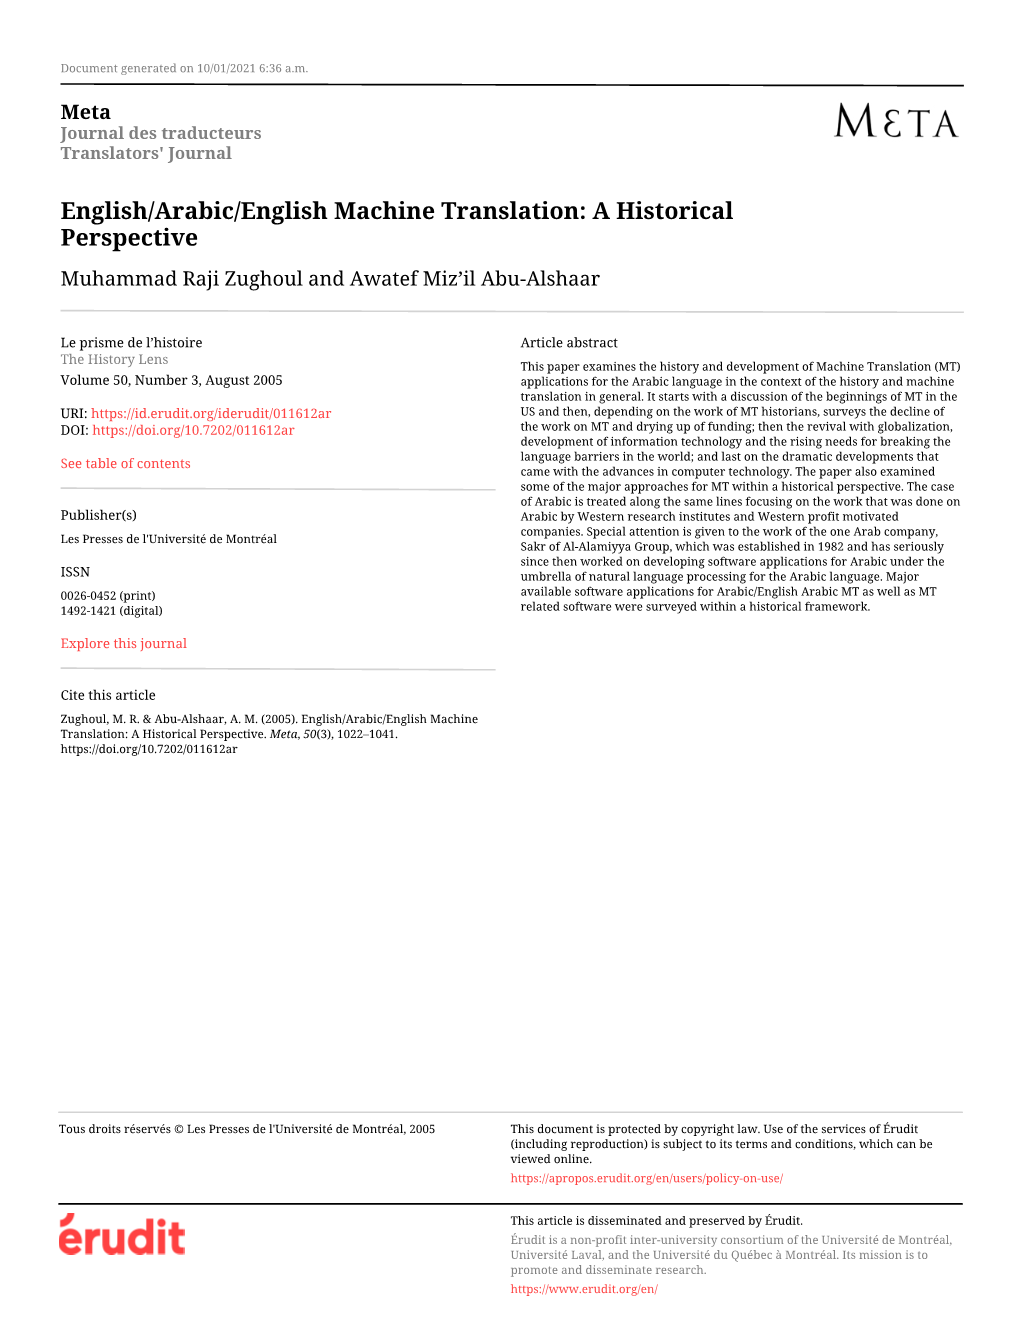 English/Arabic/English Machine Translation: a Historical Perspective Muhammad Raji Zughoul and Awatef Miz’Il Abu-Alshaar